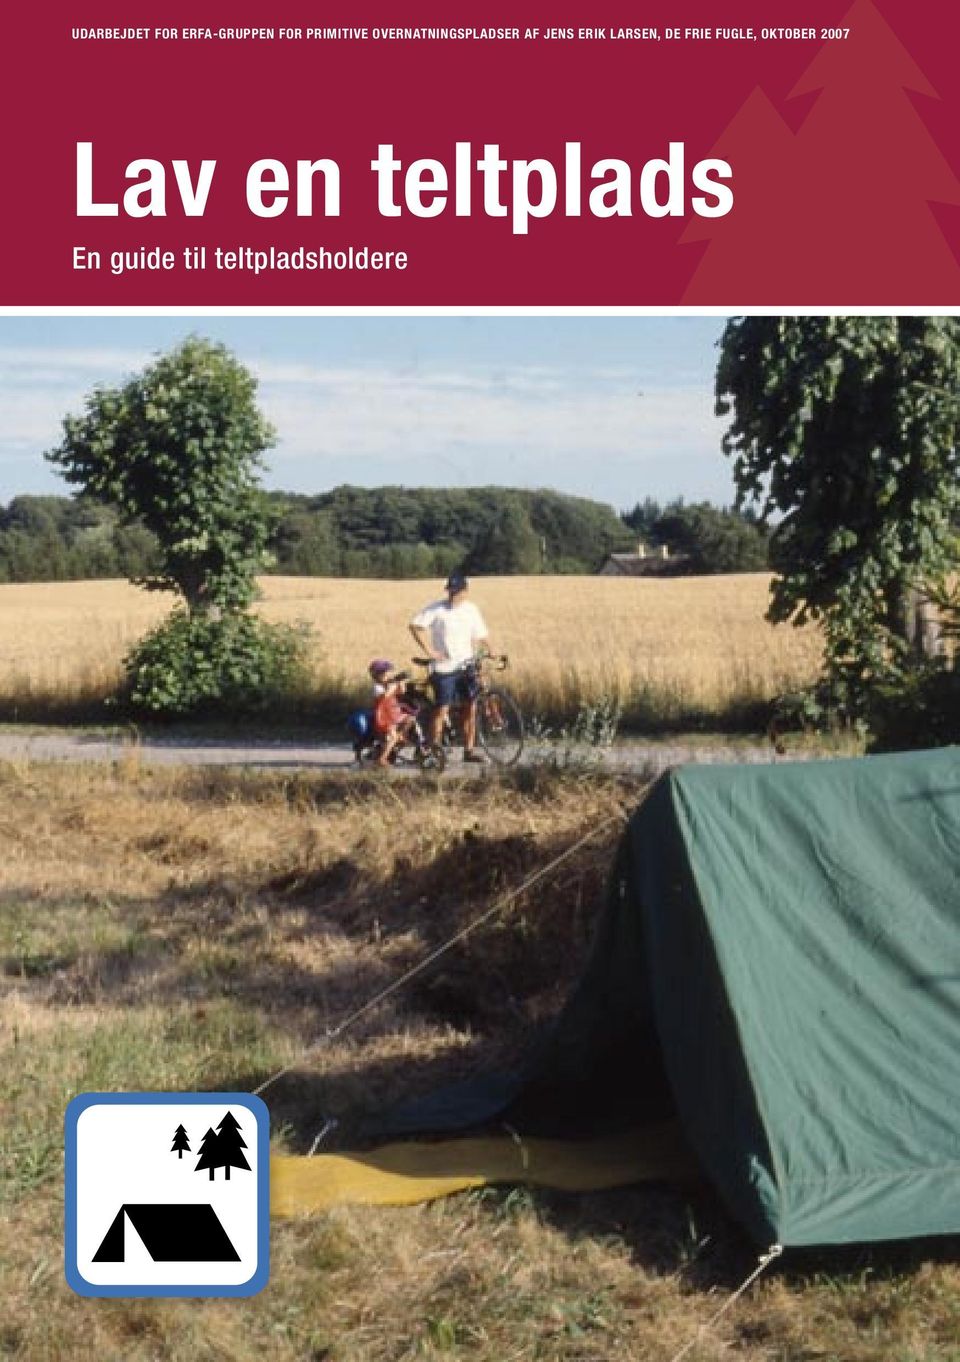 Lav en teltplads. En guide til teltpladsholdere - PDF Free Download